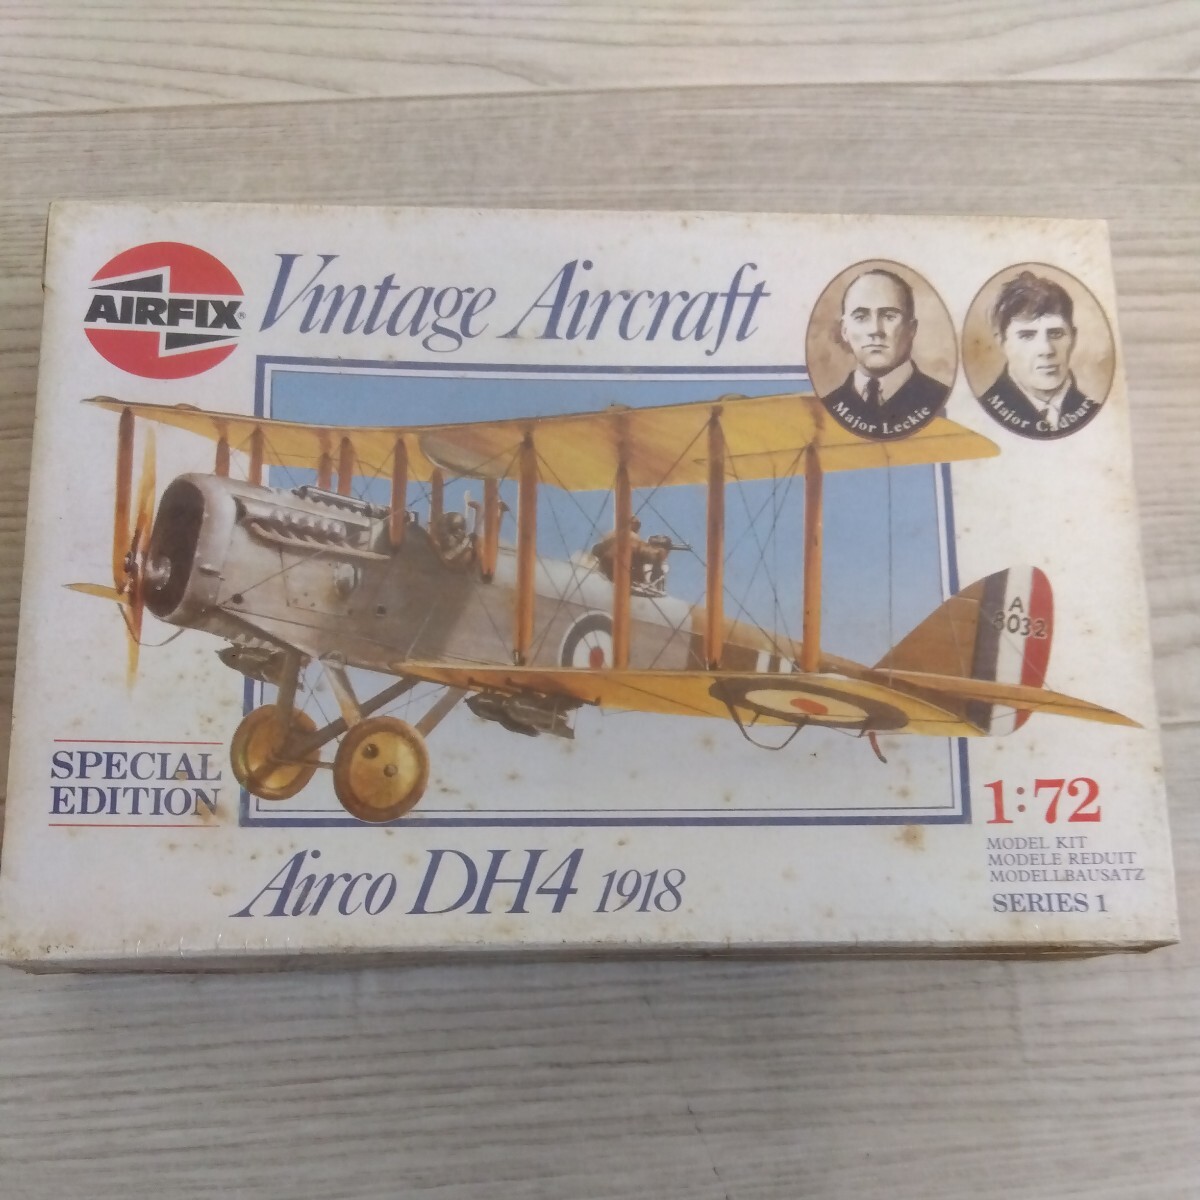 【F699】【未開封】 AIRFIX エアフィックス 1/72 Vintage Aircraft SPECIAL EDITION Airco DH4 1918 01079の画像1